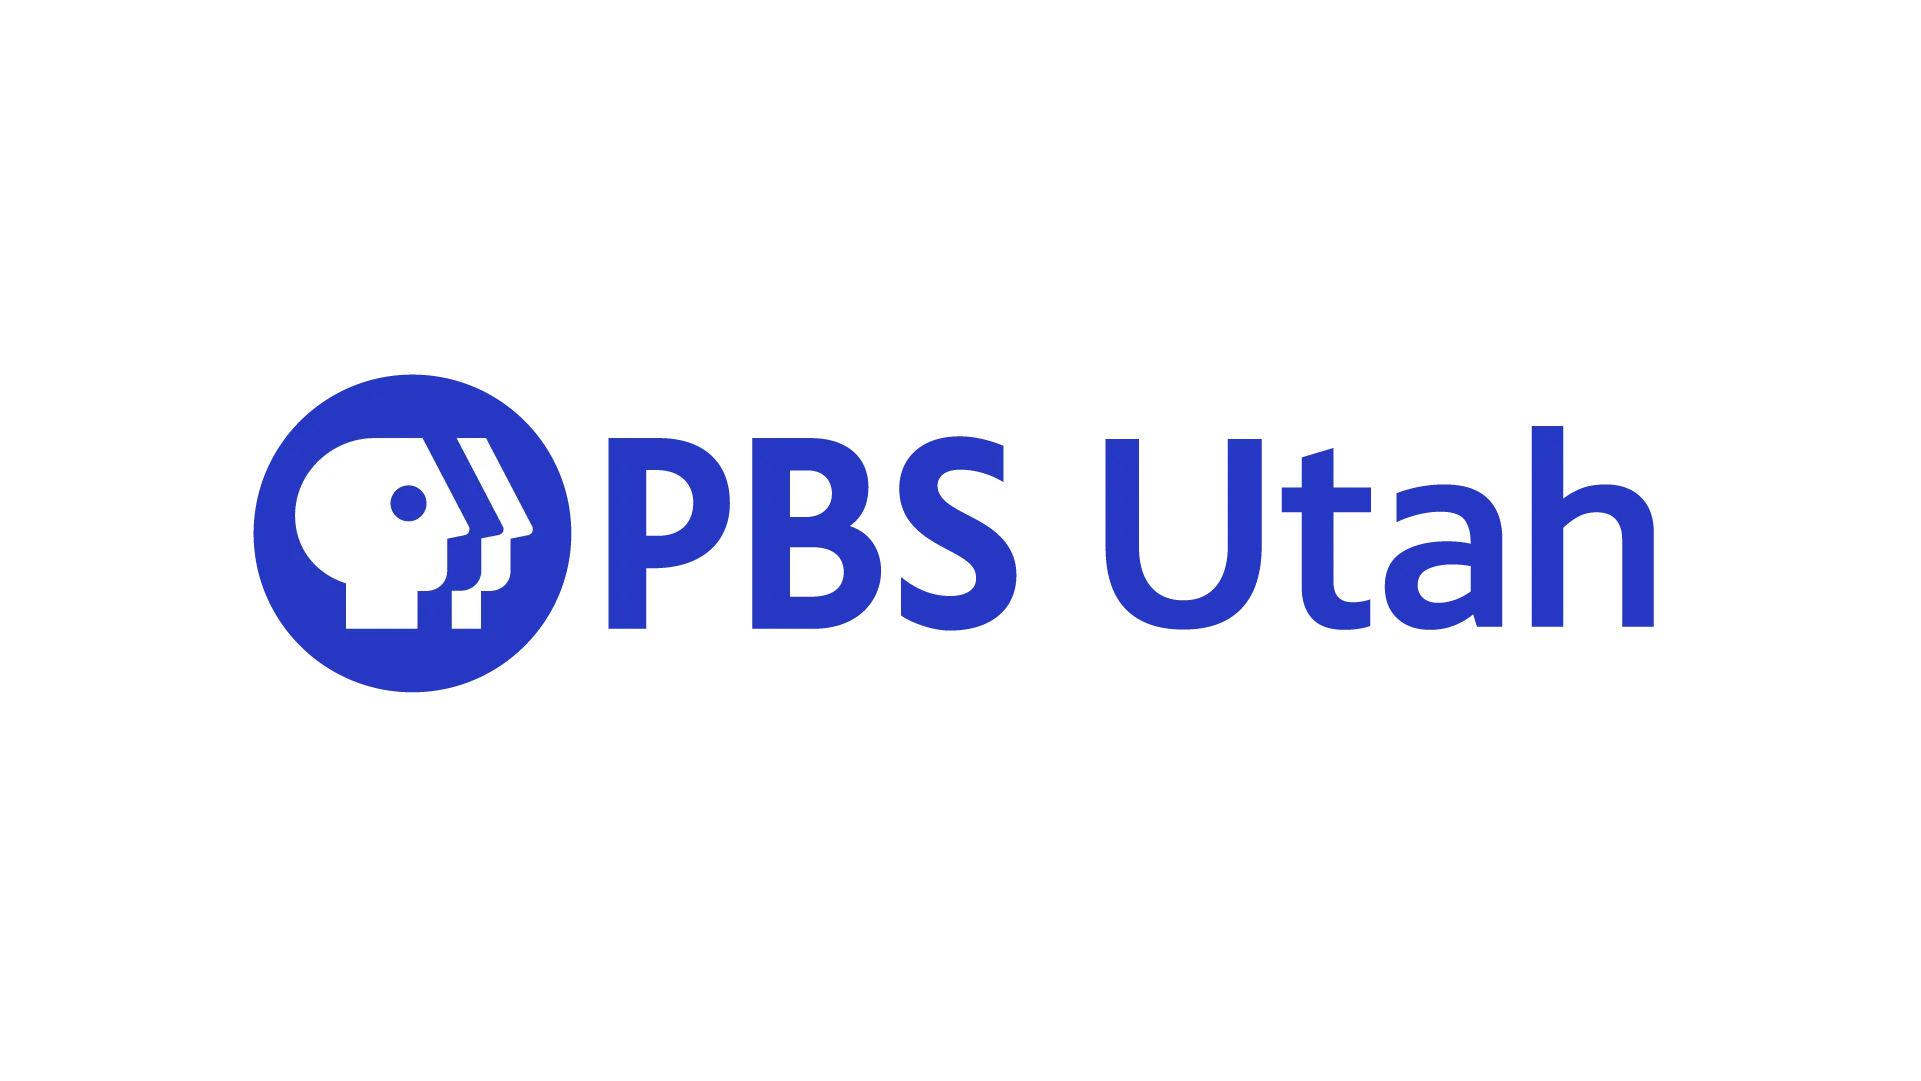 PBS Utah logo